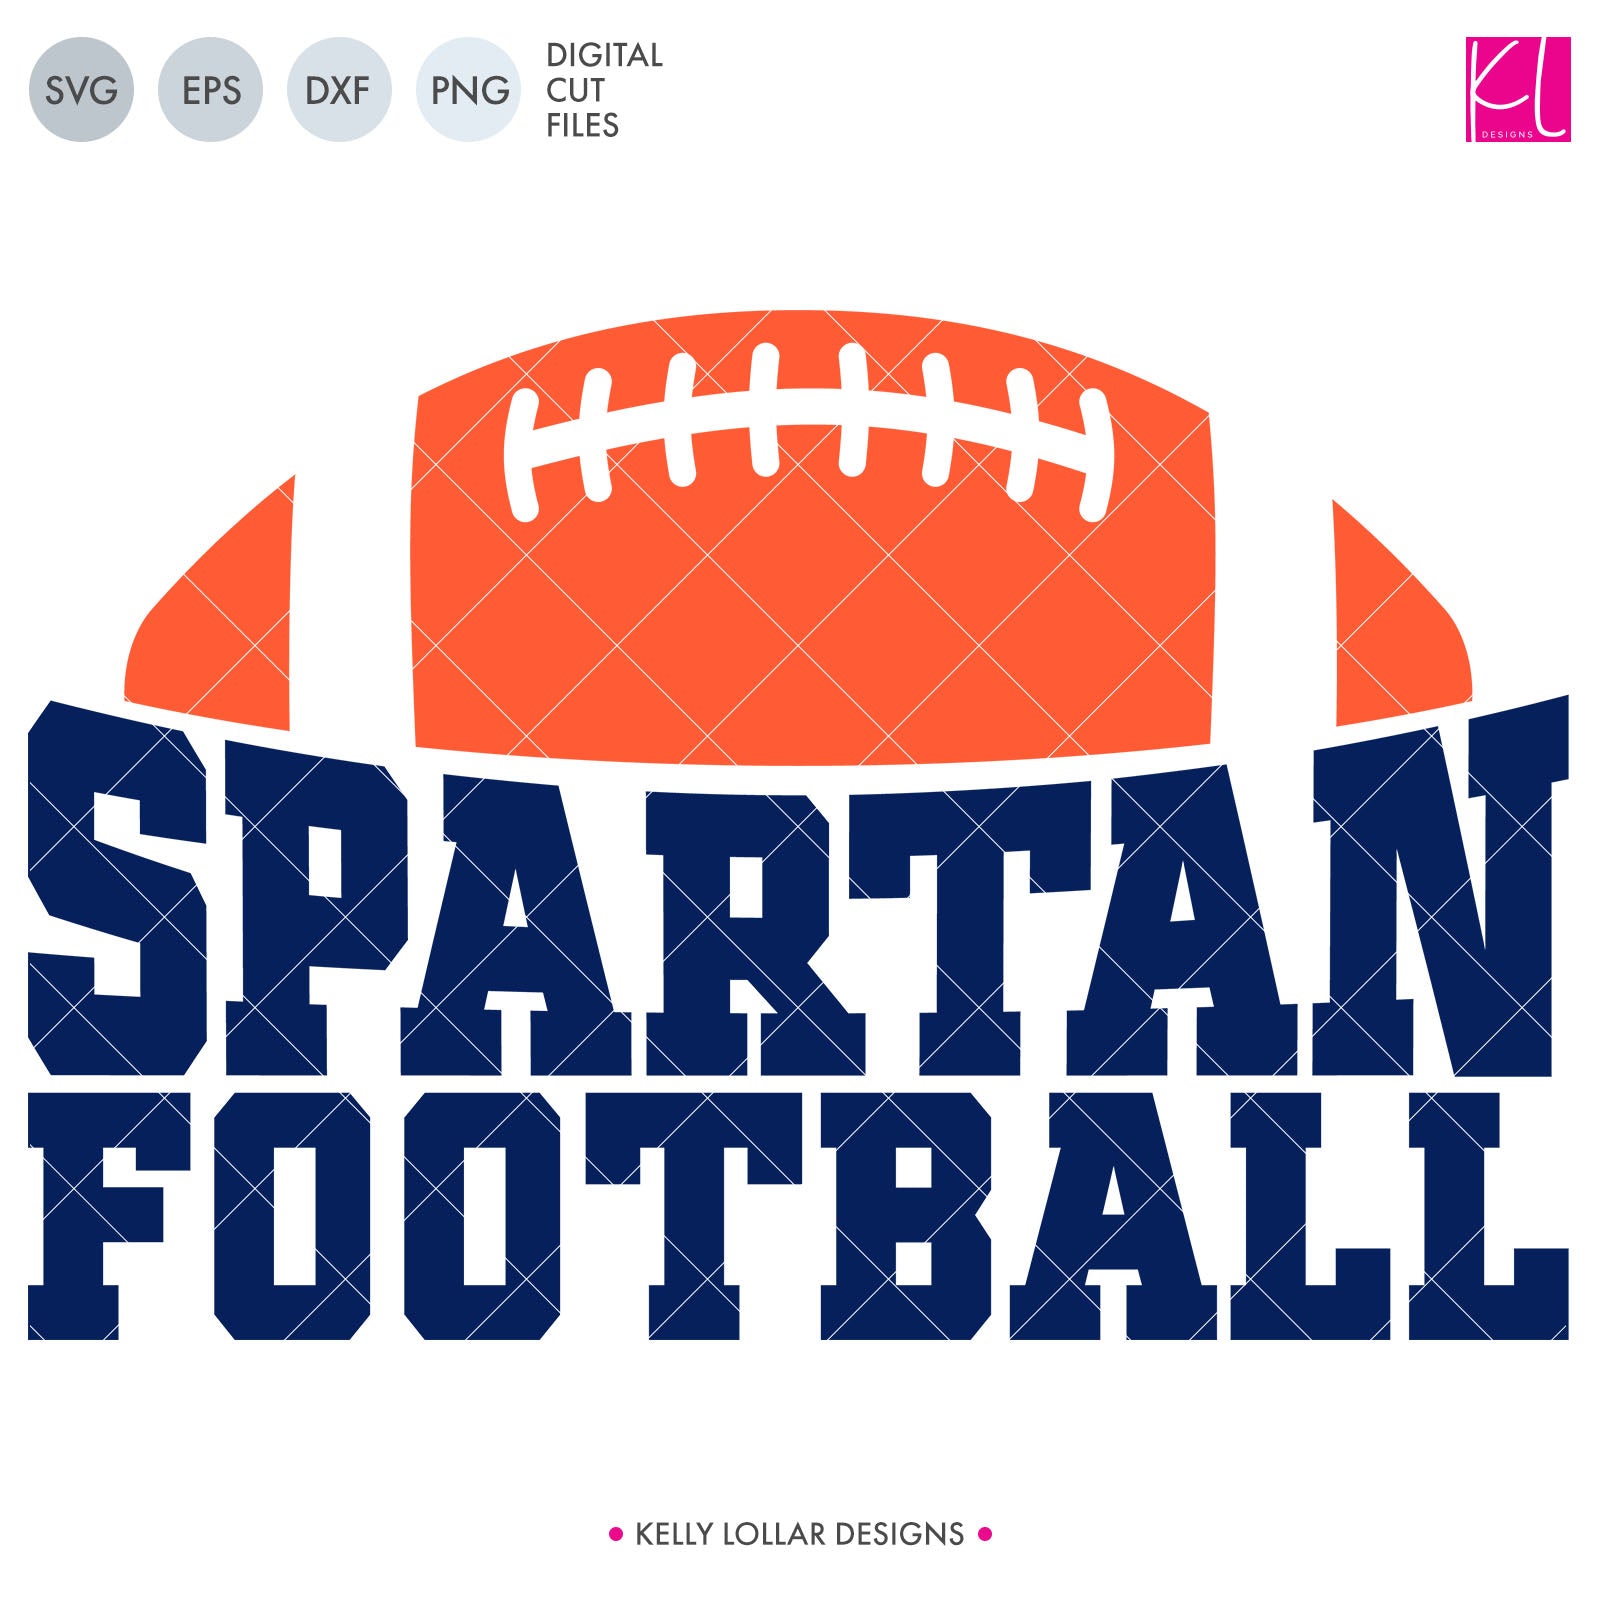 Cut Bundle Kelly Lollar DXF - Designs Spartans PNG | SVG EPS Files Football